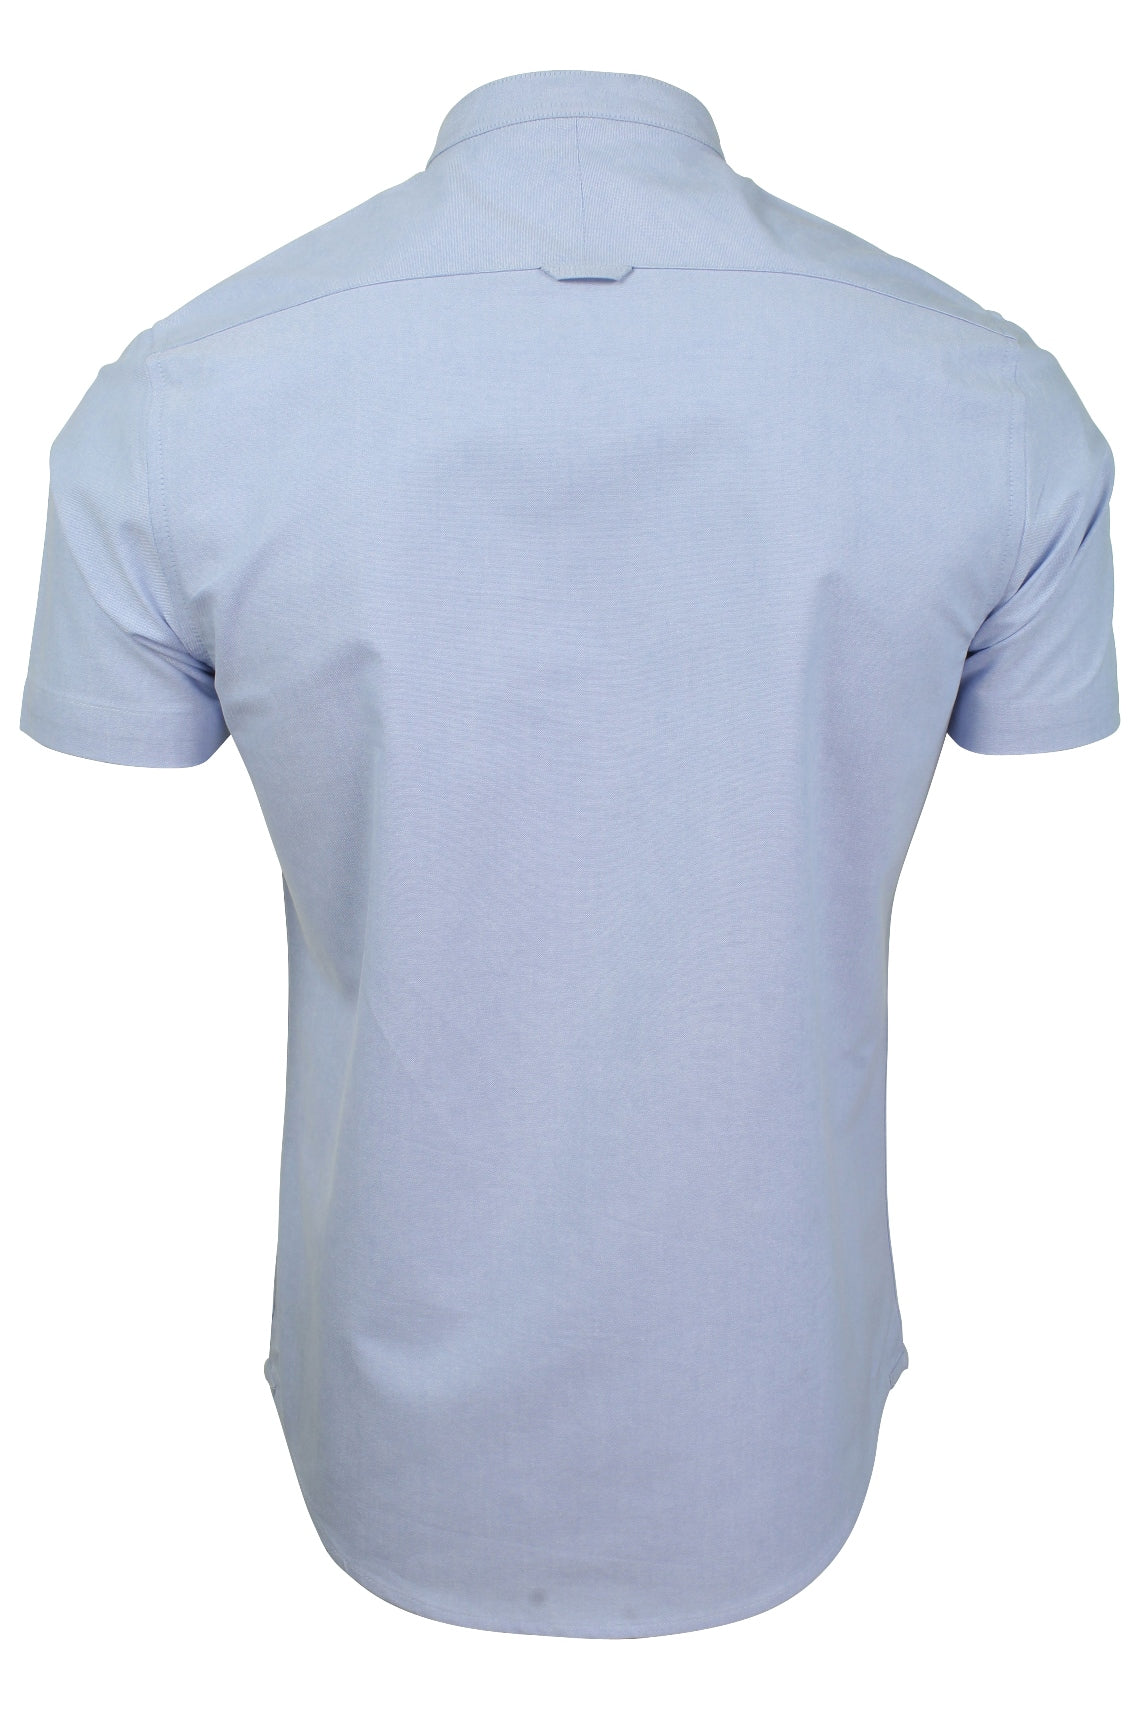 Xact Men's Grandad Collar Oxford Shirt Slim Fit Short Sleeved, 03, Xsh1022, Light Blue